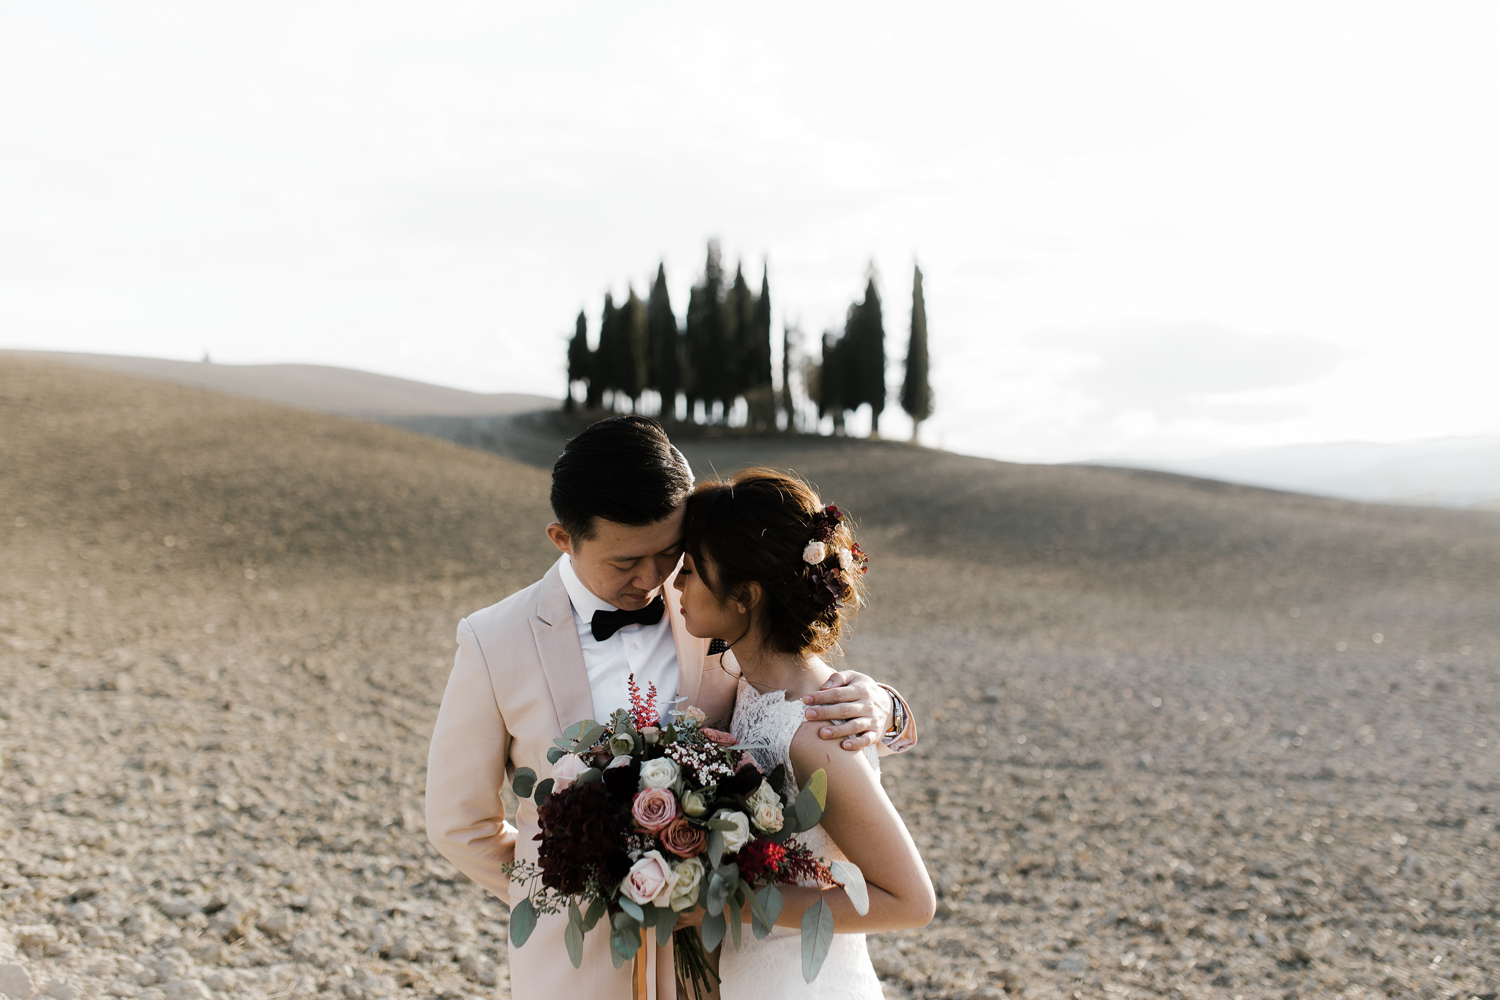 088-wedding-photographer-italy-tuscany-mindy-eddy.jpg